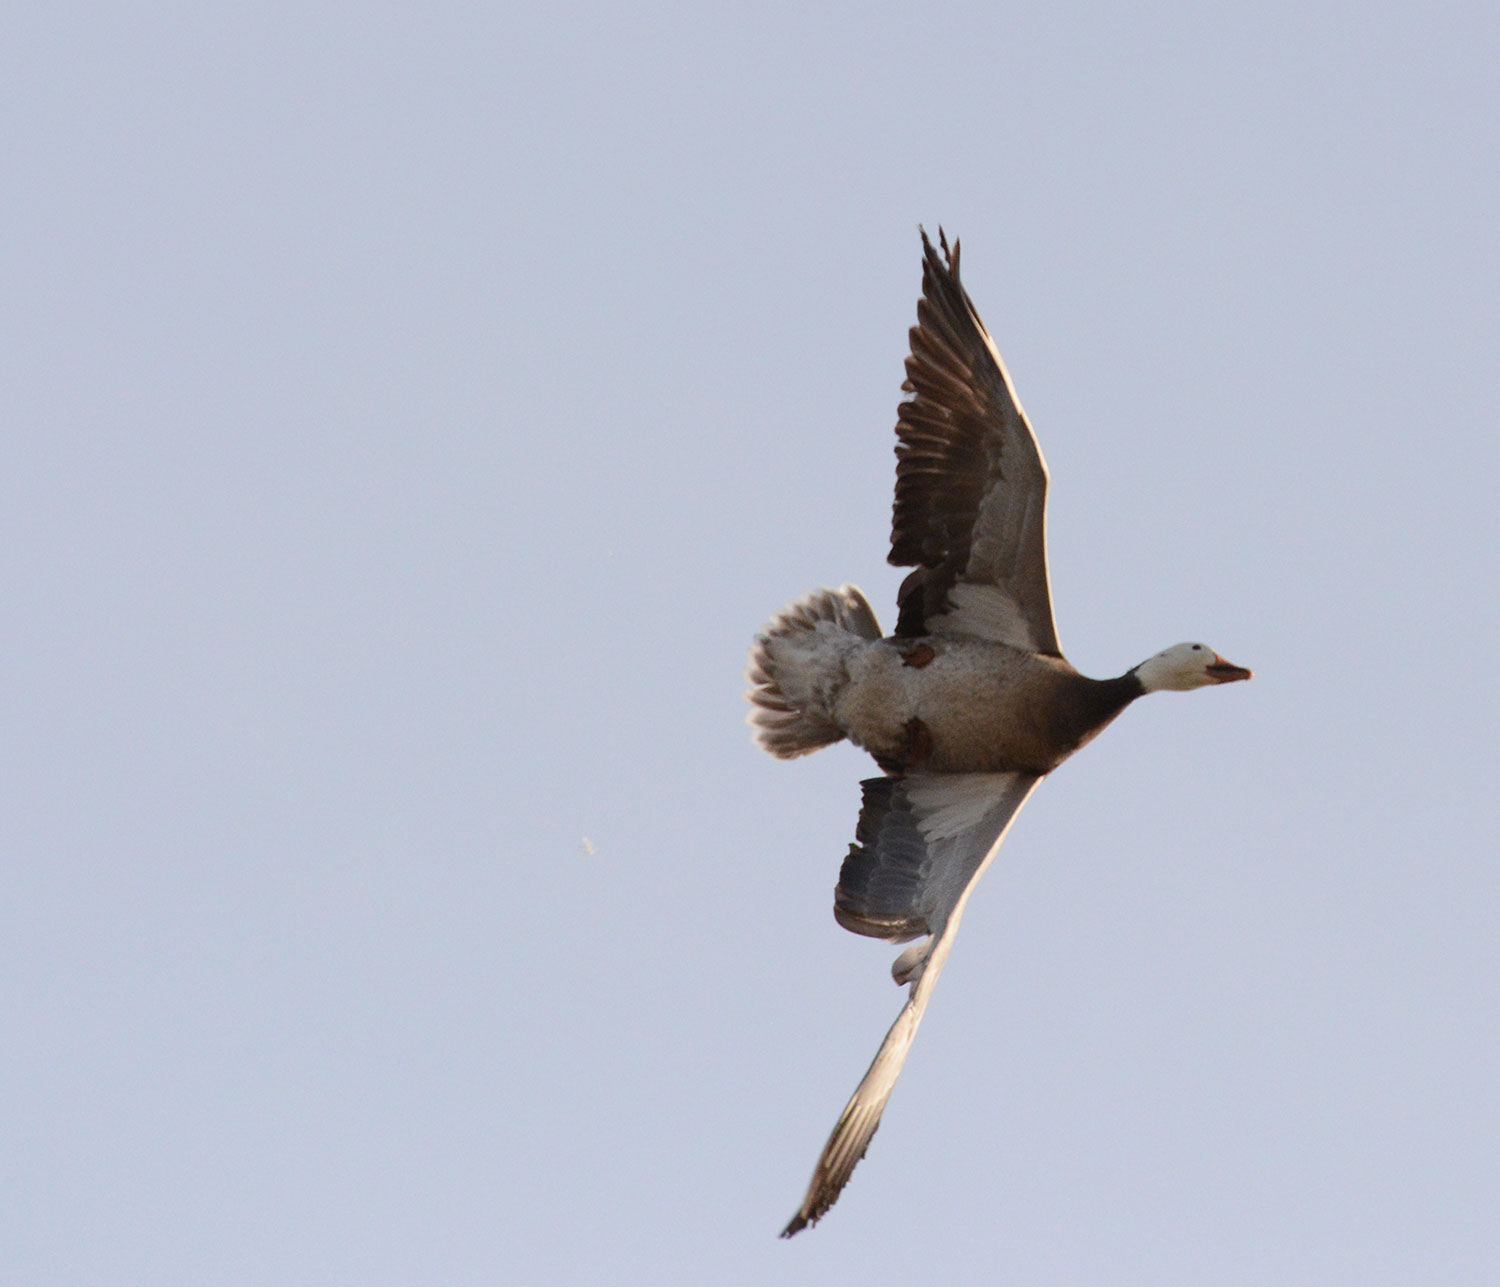 A snow goose in flight.